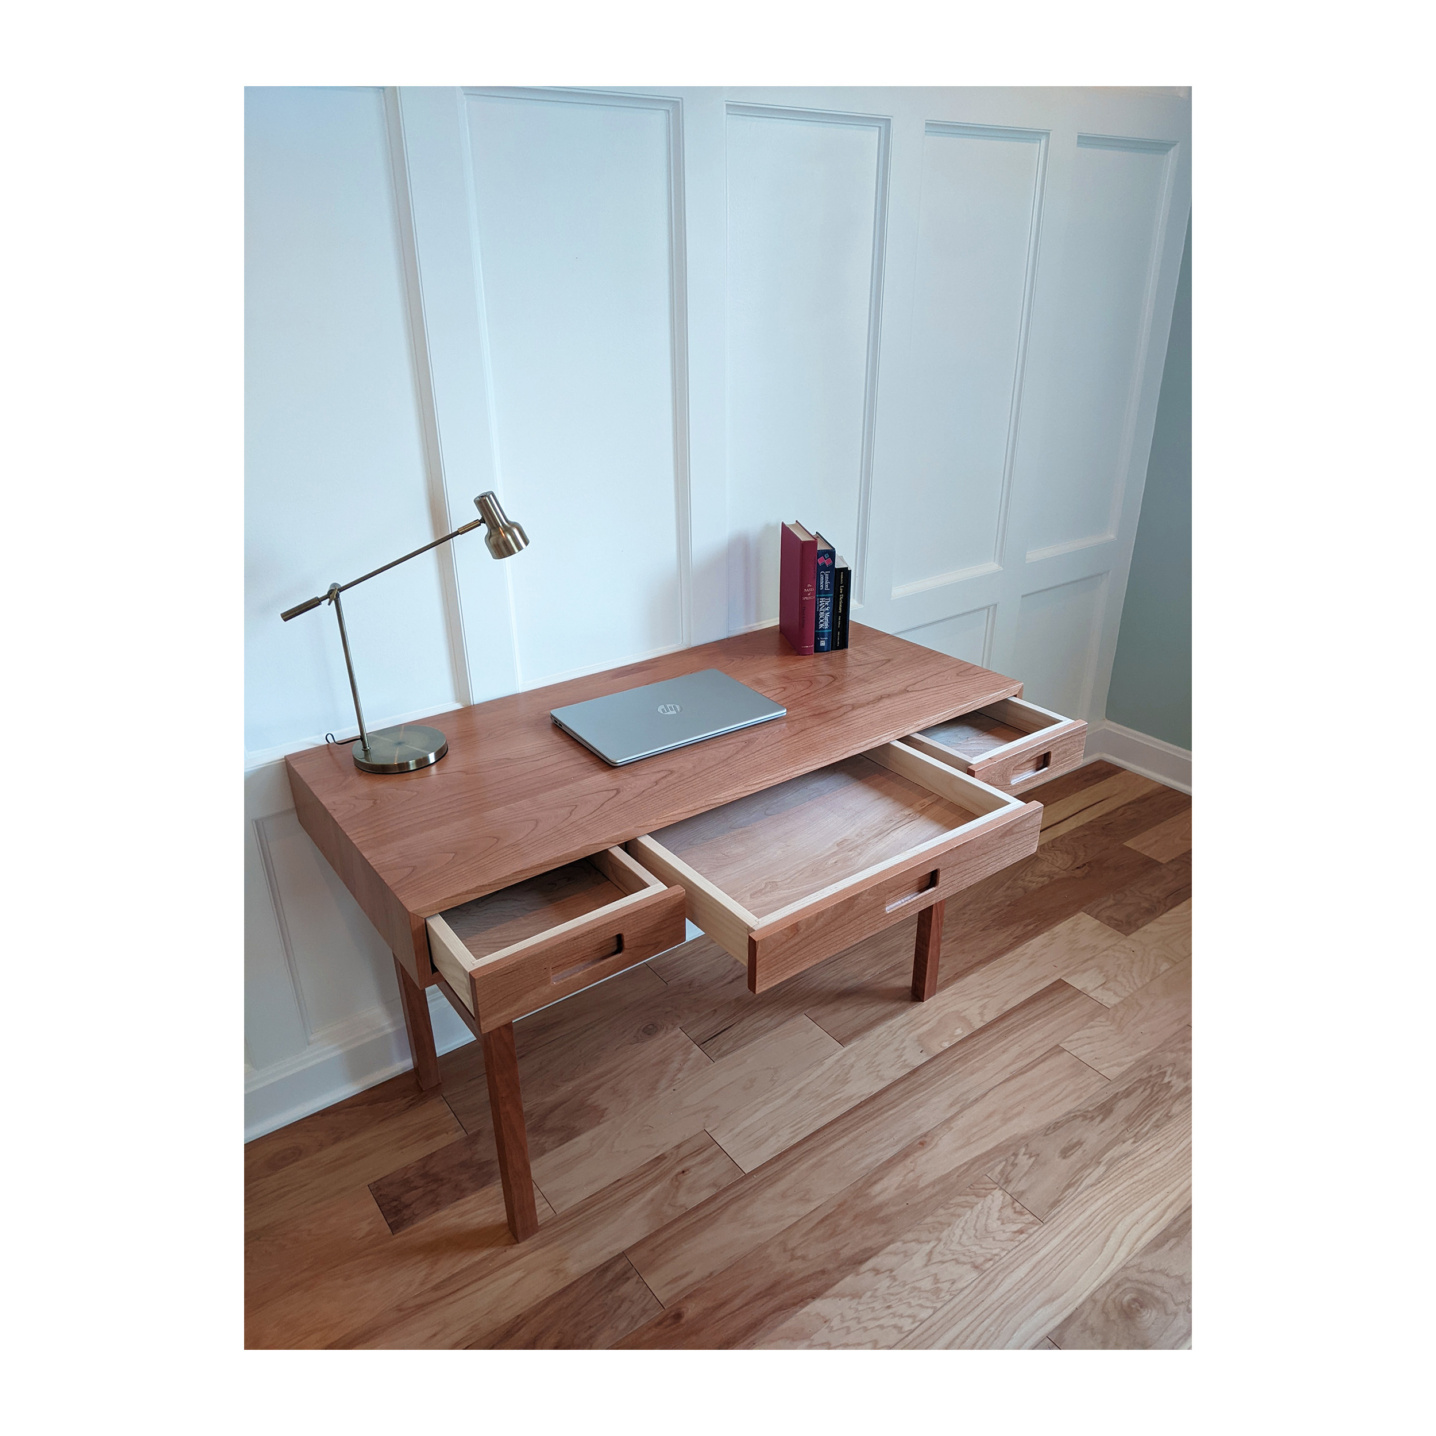 Locally handmade cherry wood modern desk with three drawers